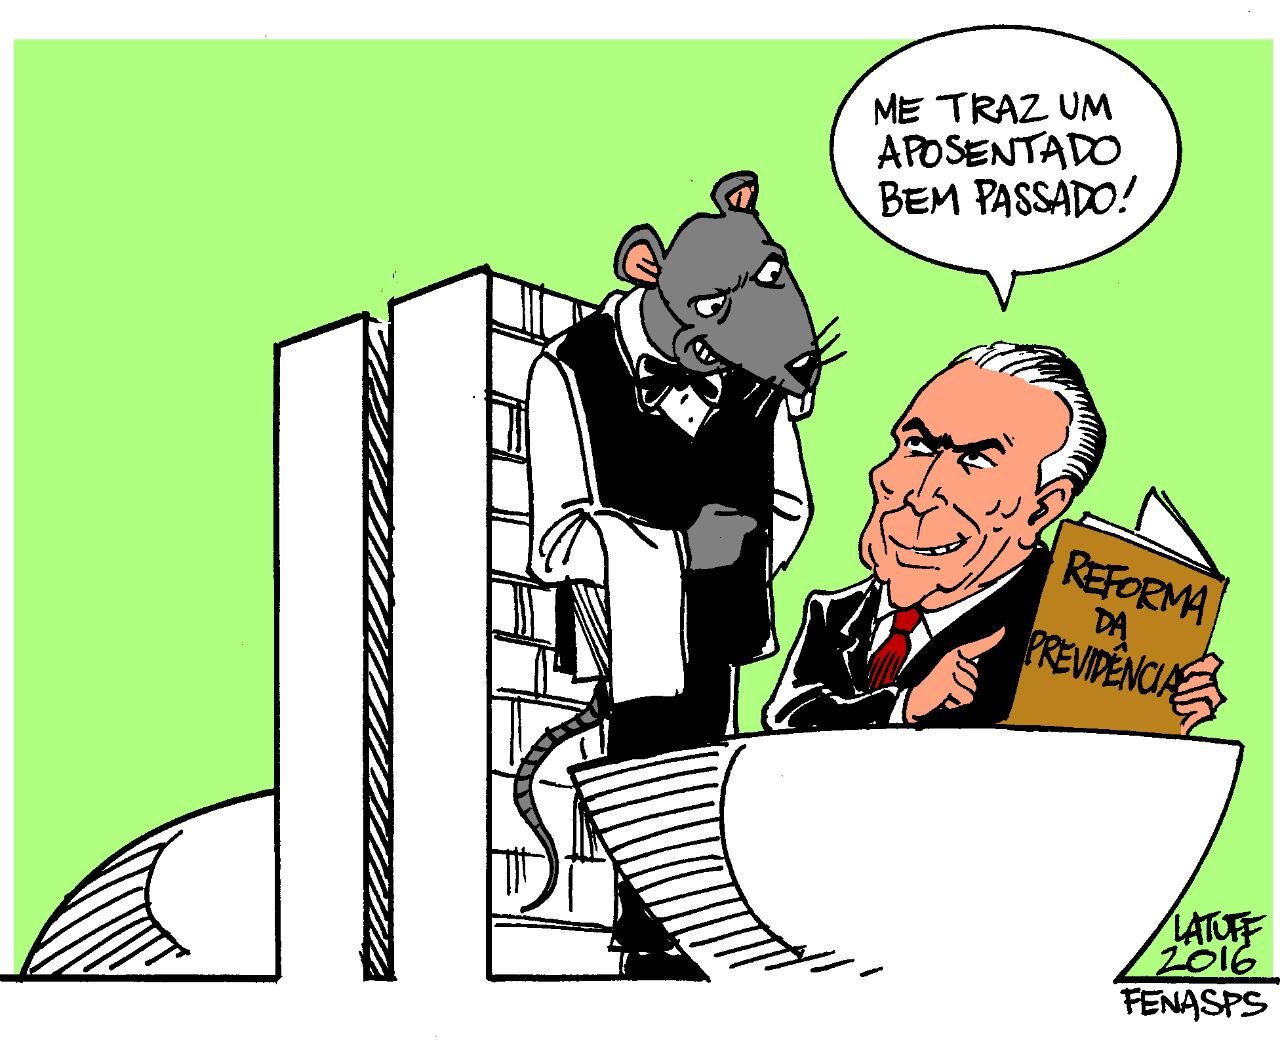 Latuff 2016/FENASPS